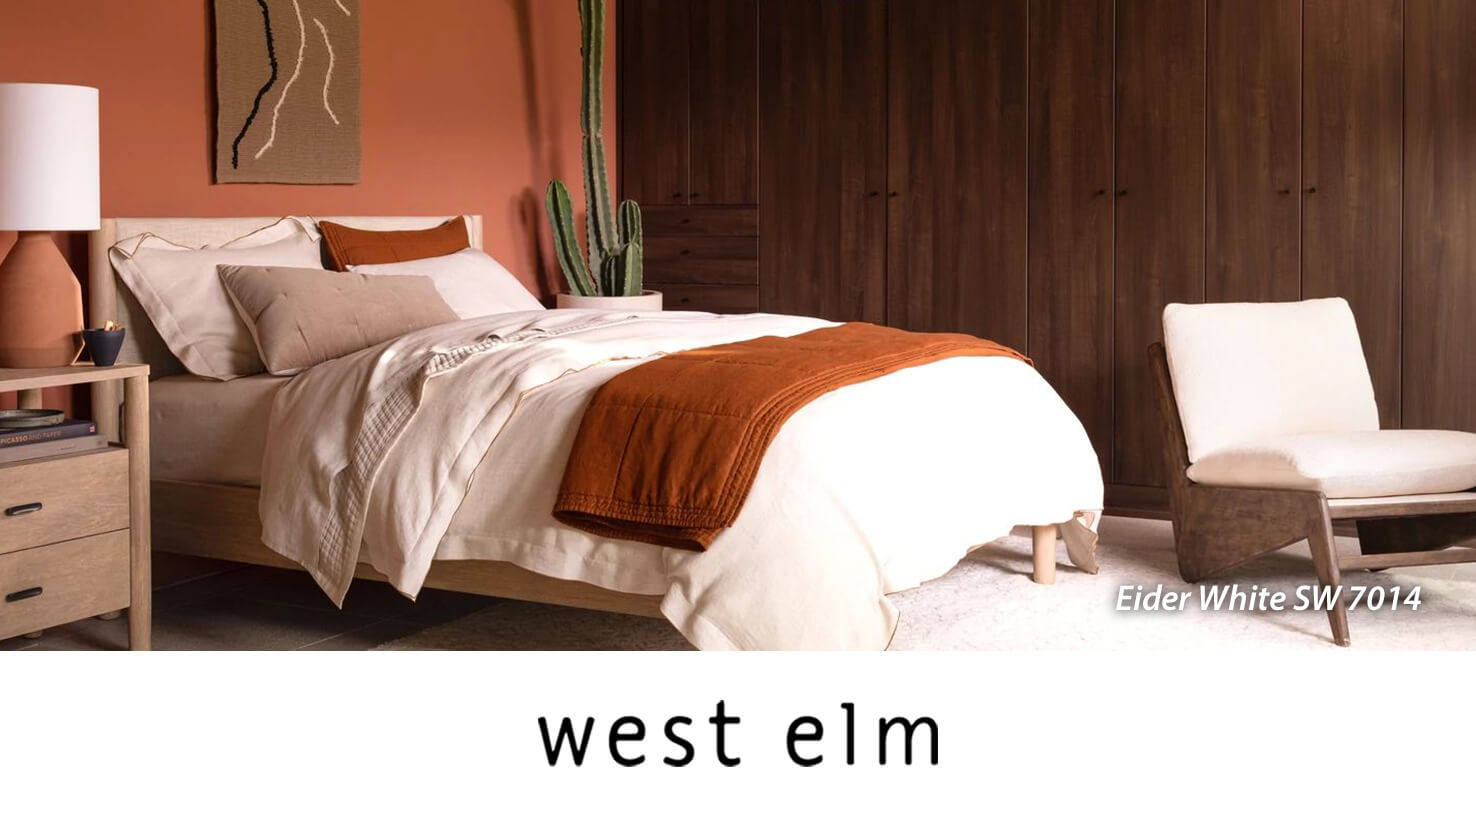 West Elm  Sherwin-Williams